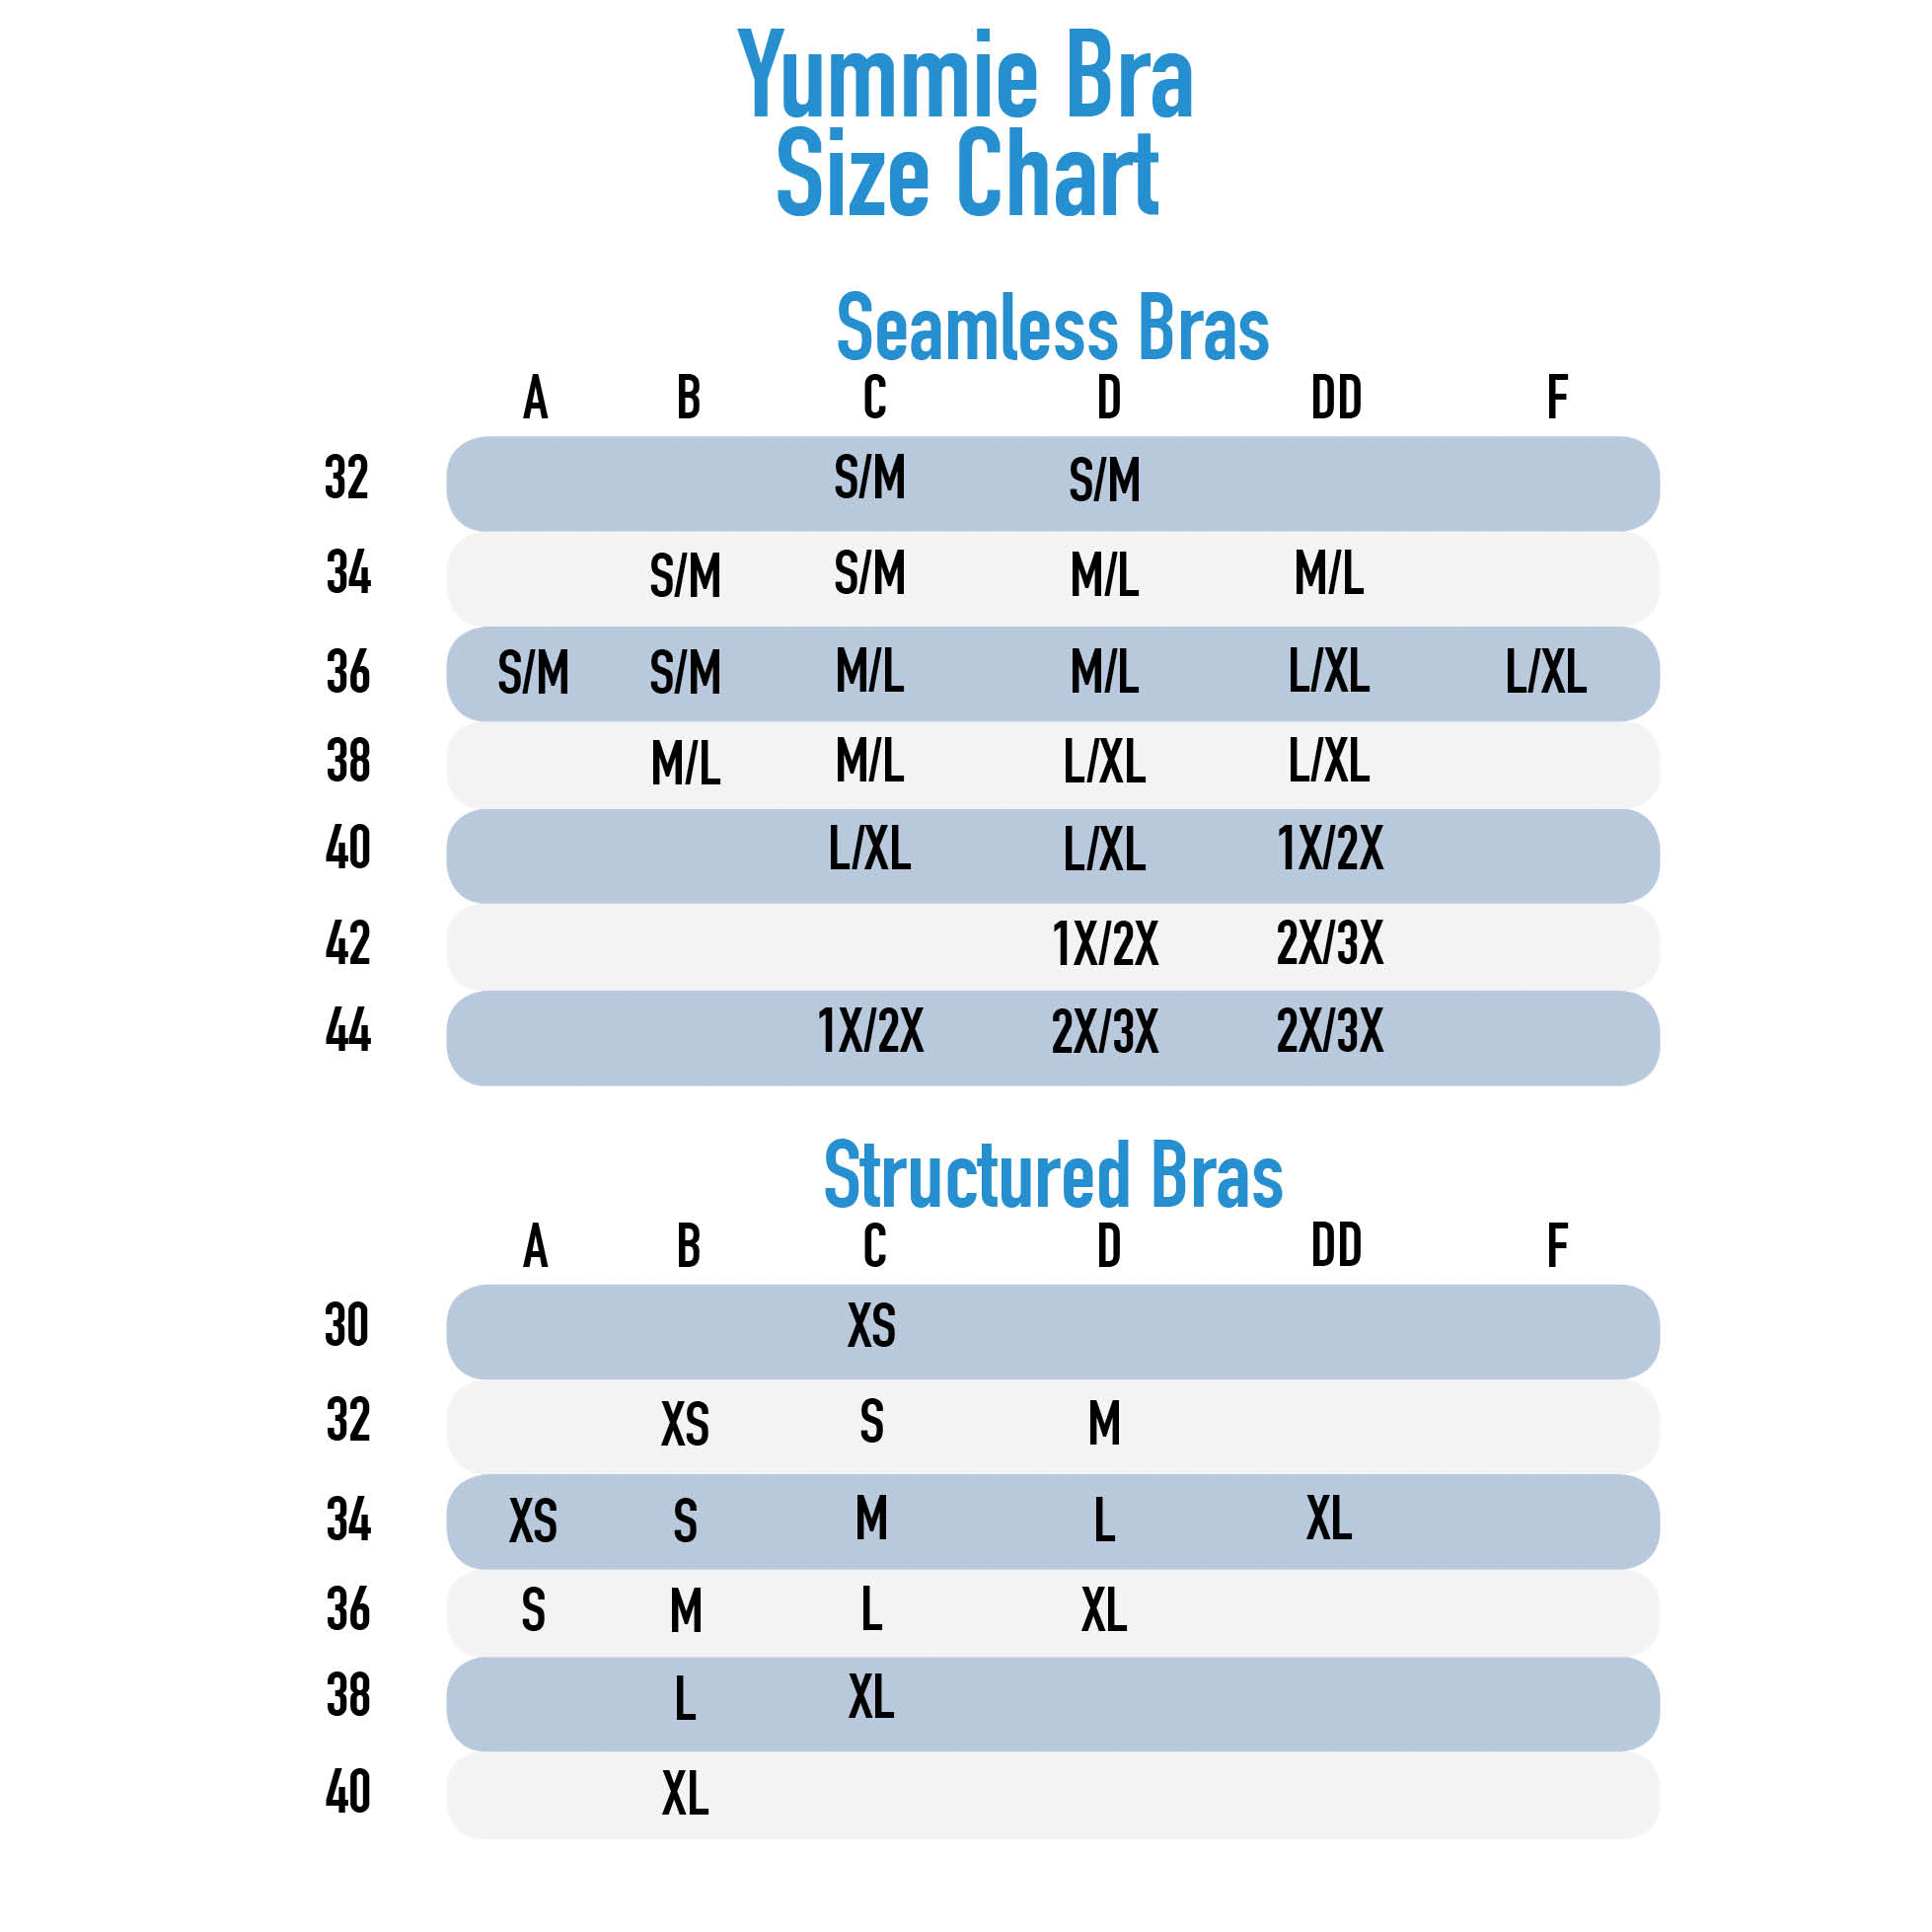 Yummie Bra Size Chart